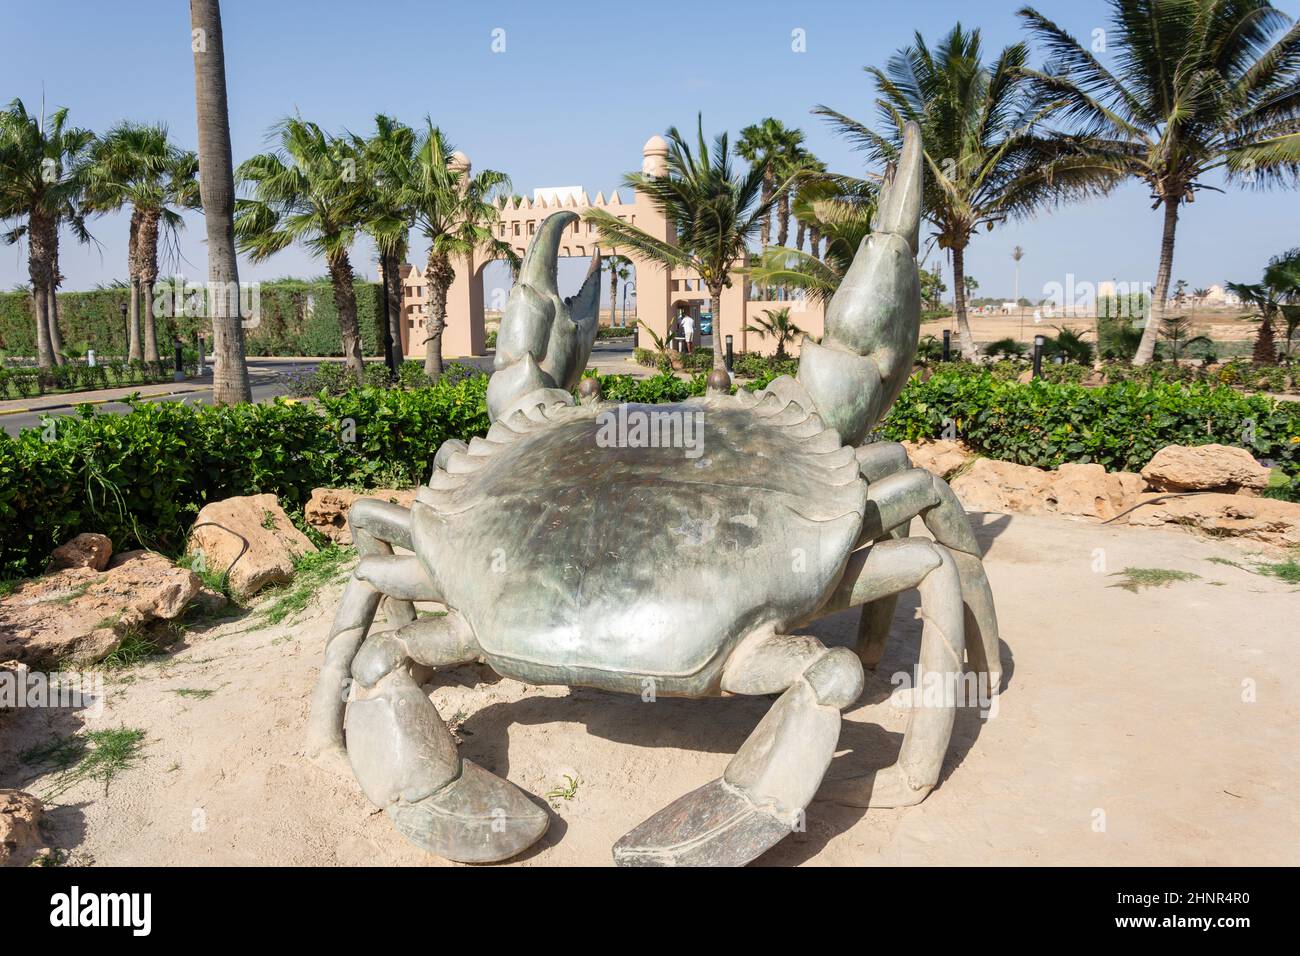 Krabbenskulptur am Eingang zum Rui Funana Hotel, Santa Maria, Sal, República de Cabo (Kap Verde) Stockfoto